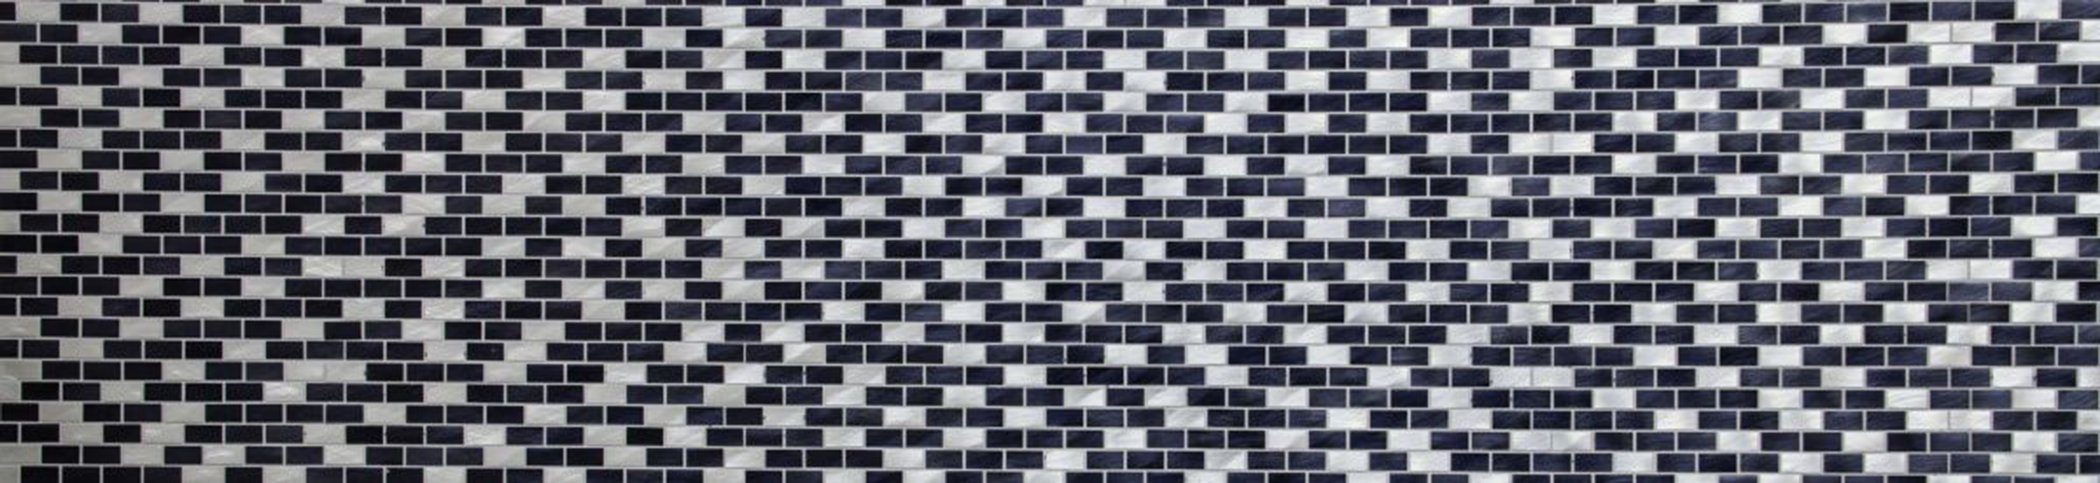 Mosani Mosaikfliesen Mosaik Fliese Aluminium Brick Küchenwand Fliesenspiegel schwarz